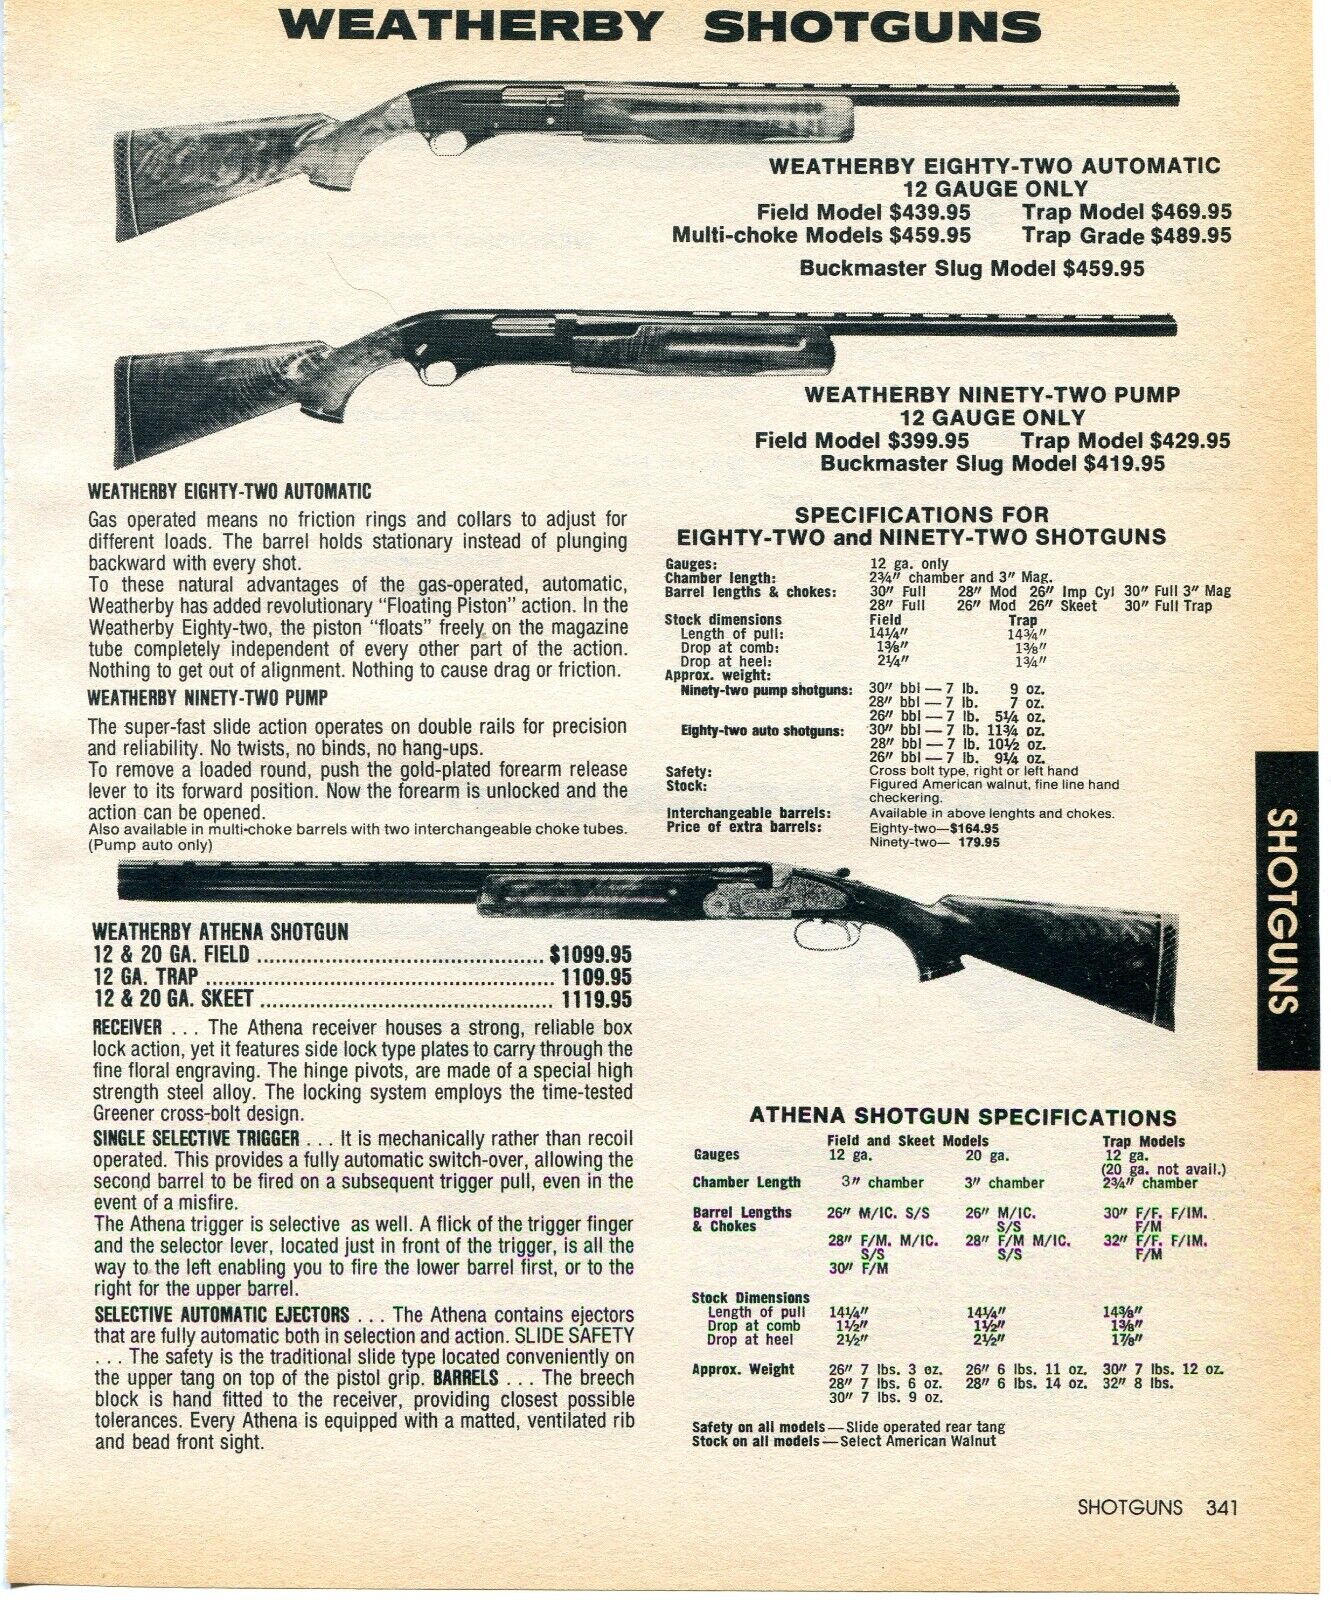 1984 Print Ad of Weatherby Eighty-Two Ninety-Two & Athena Shotgun